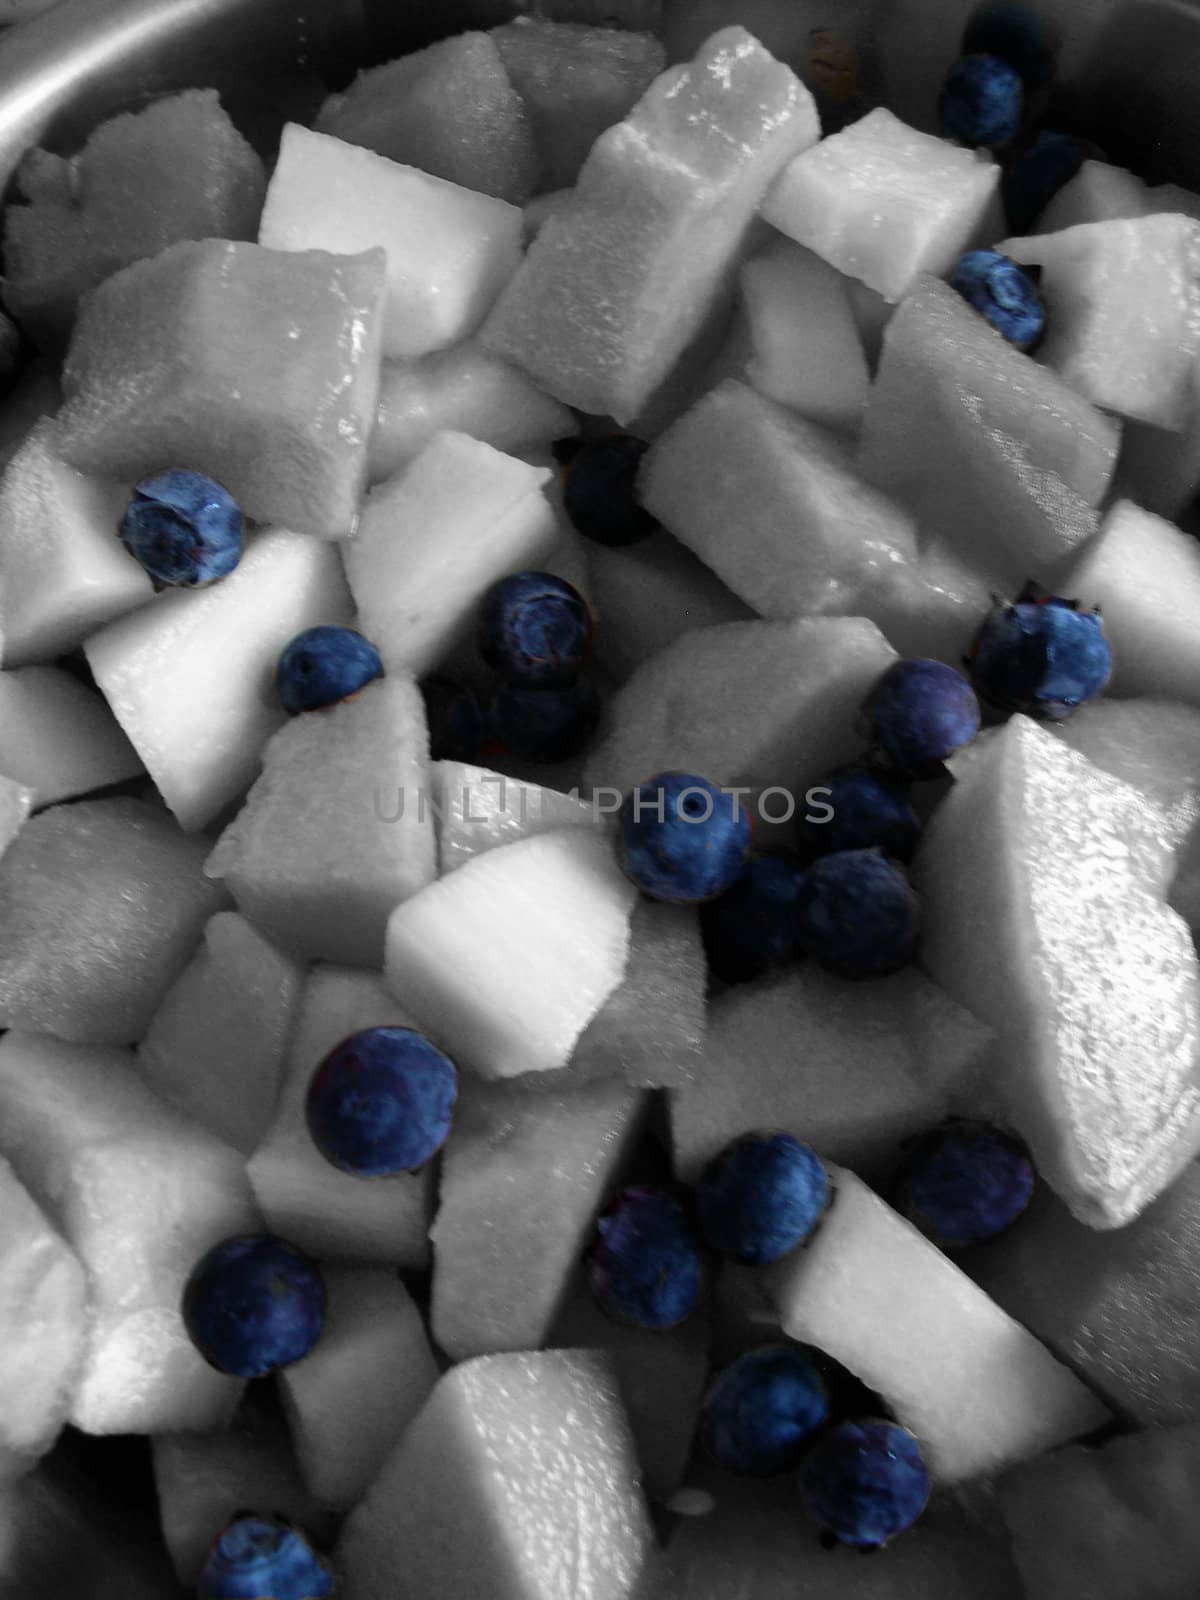 blueberries by photosbyrob